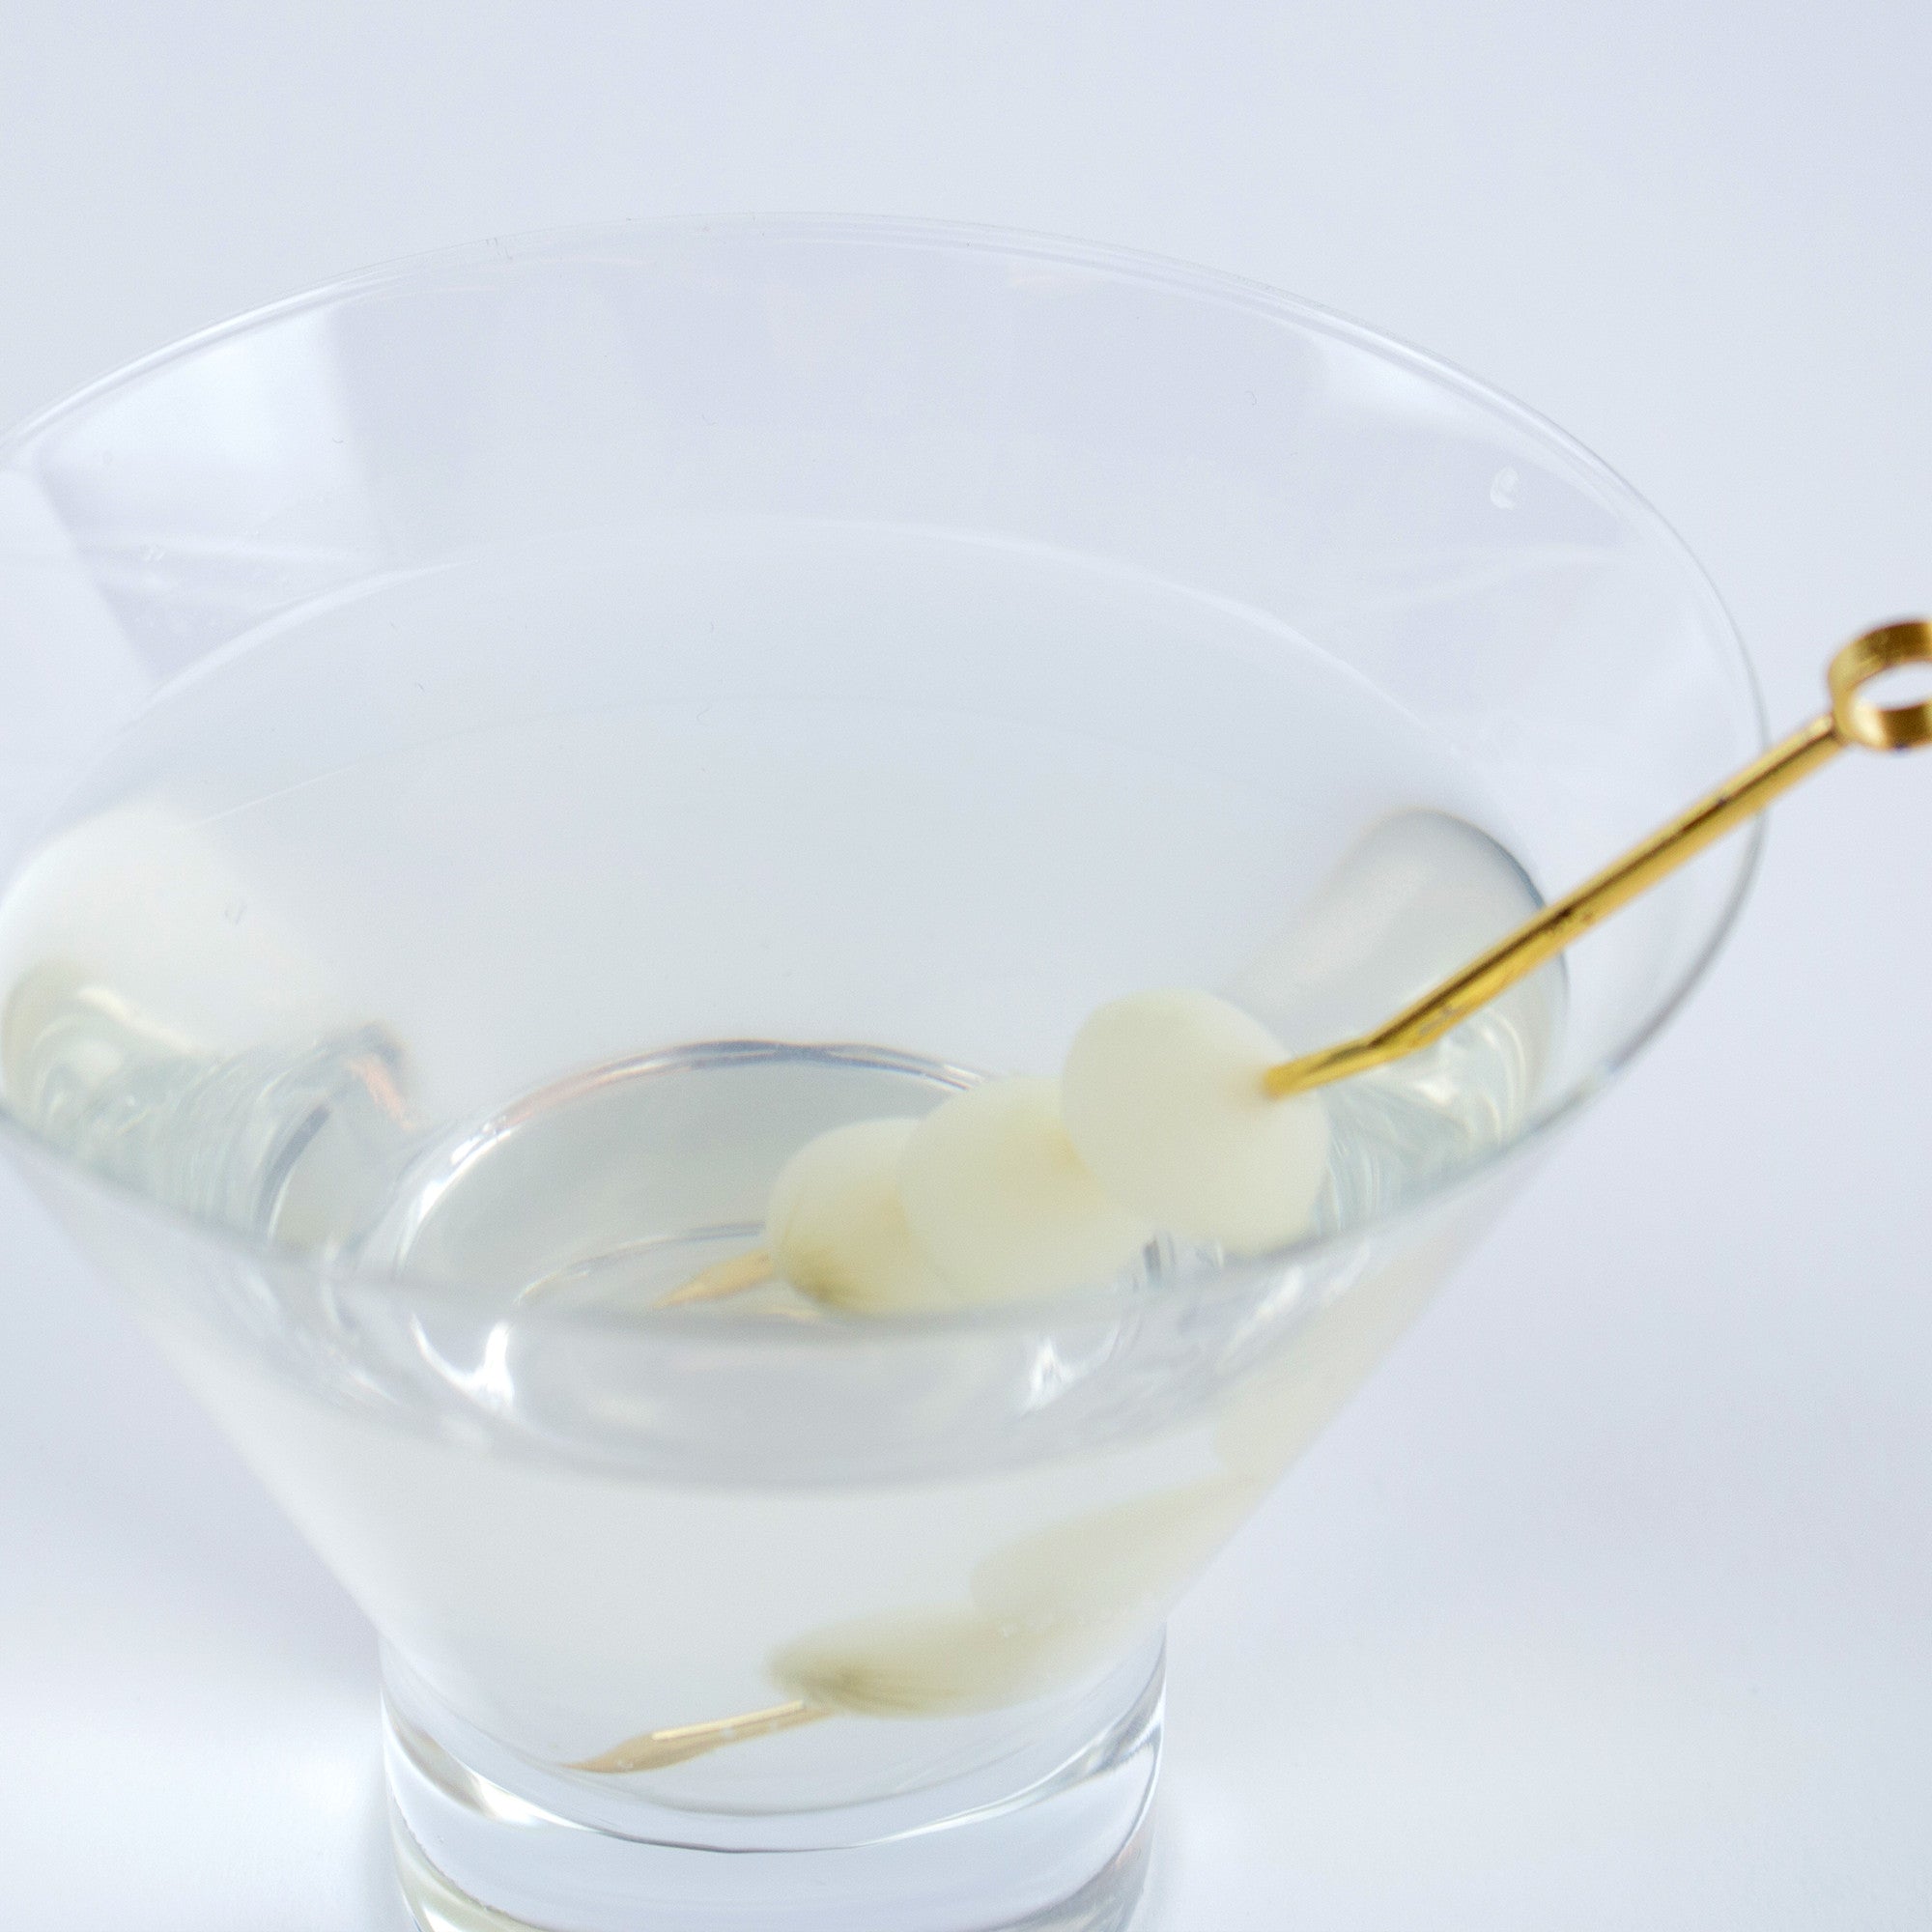 Westport Stemless Martini Glass